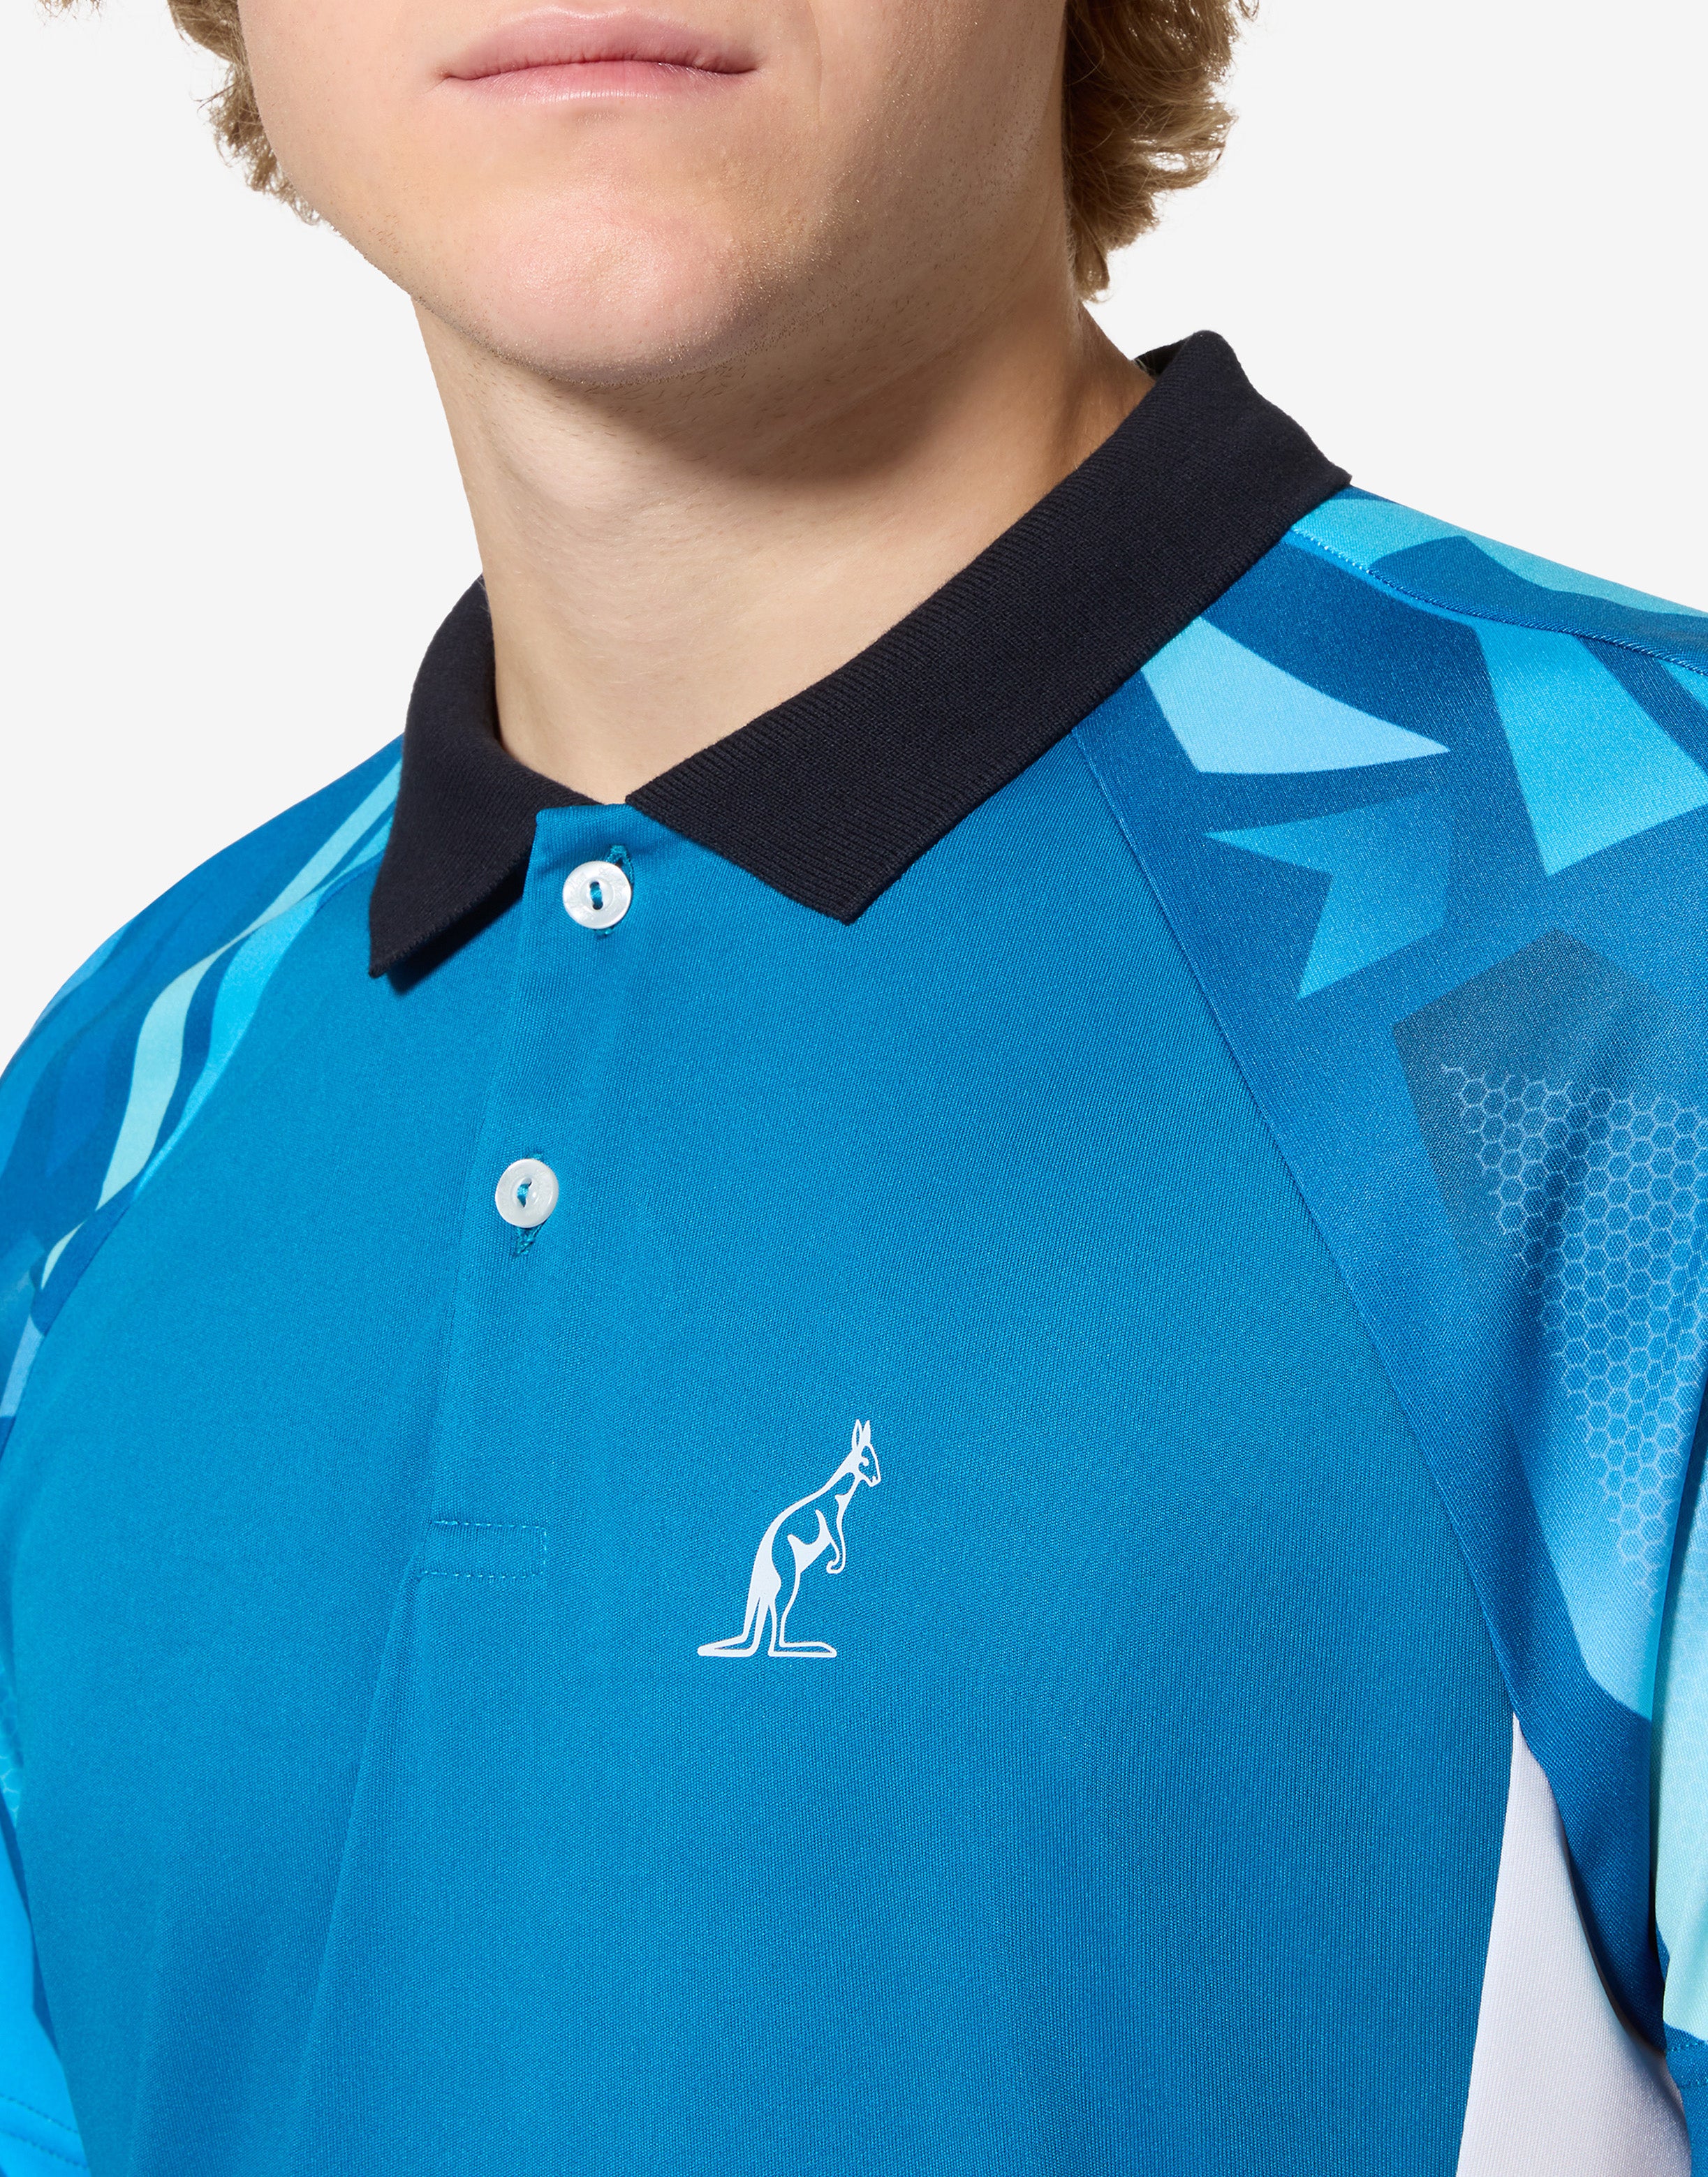 Abstract Polo Shirt: Australian Tennis